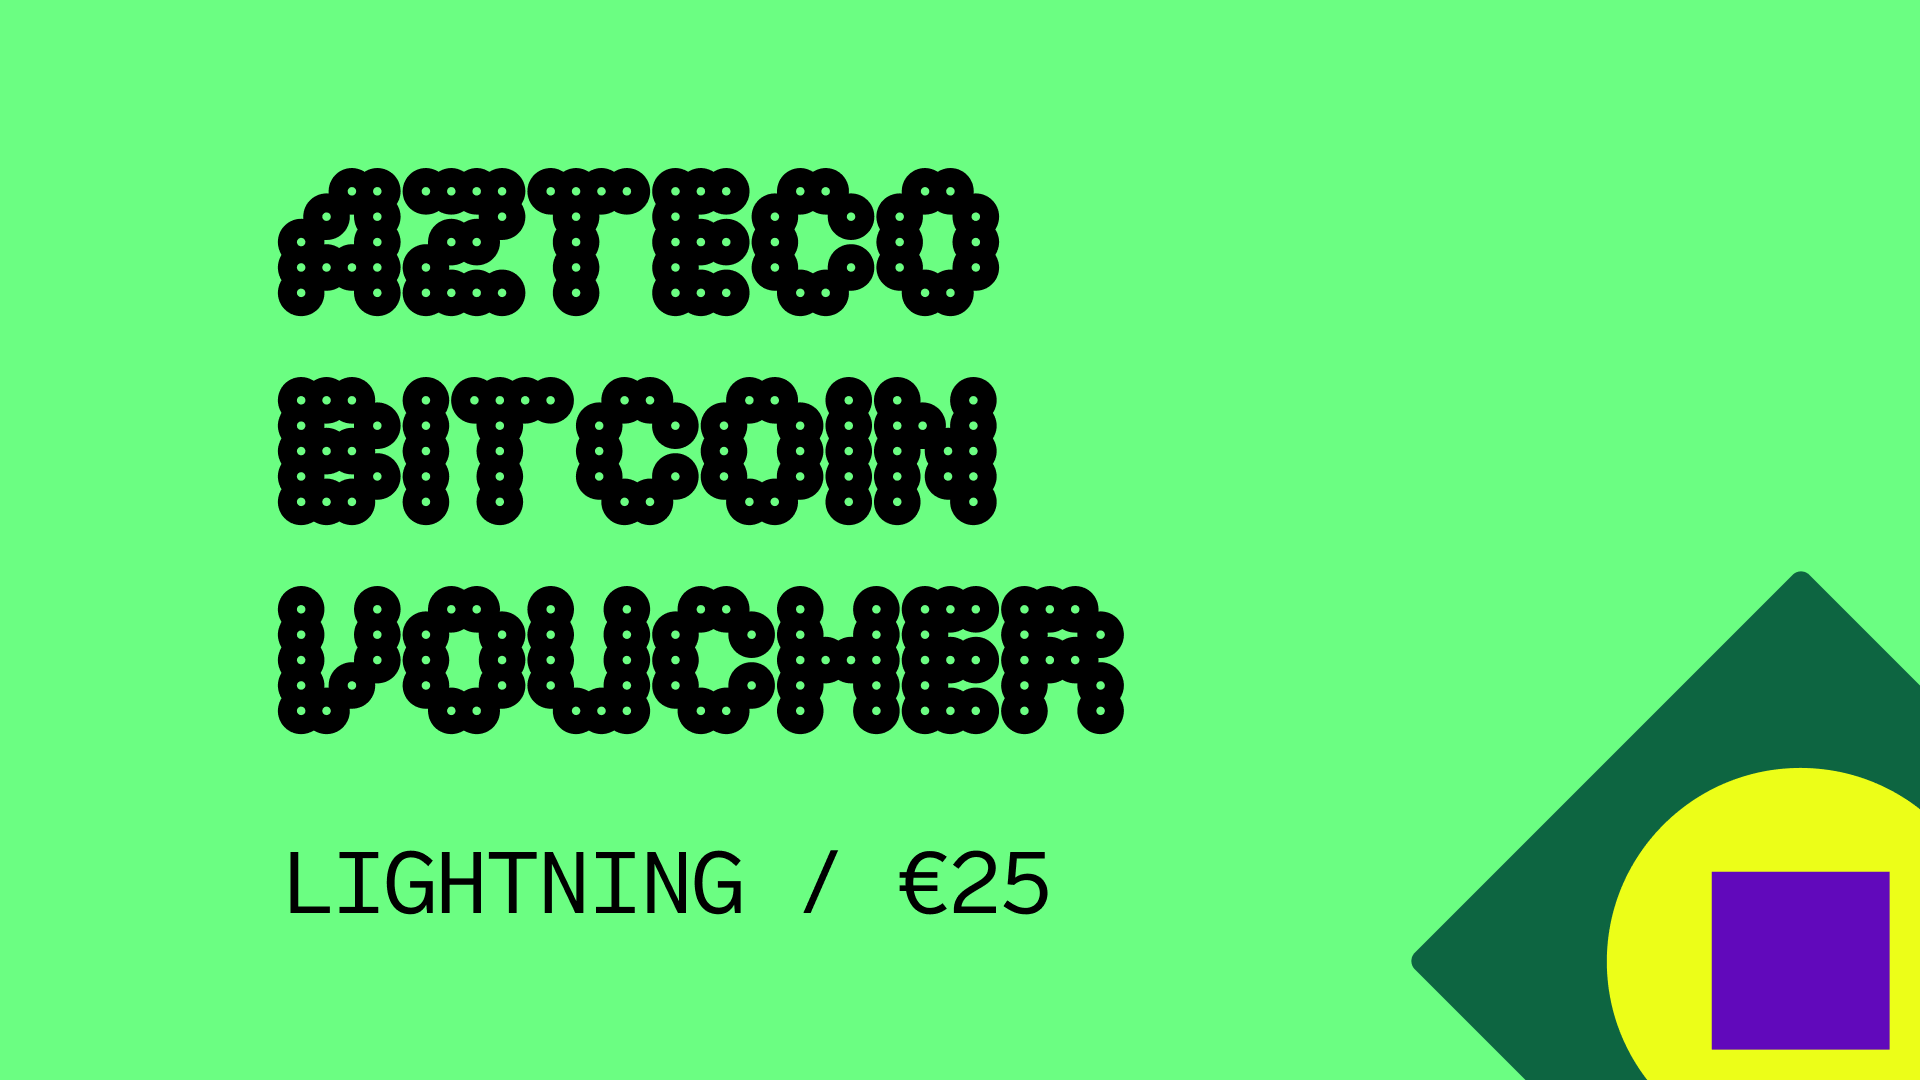 Azteco Bitcoin Lighting €25 Voucher, $28.25